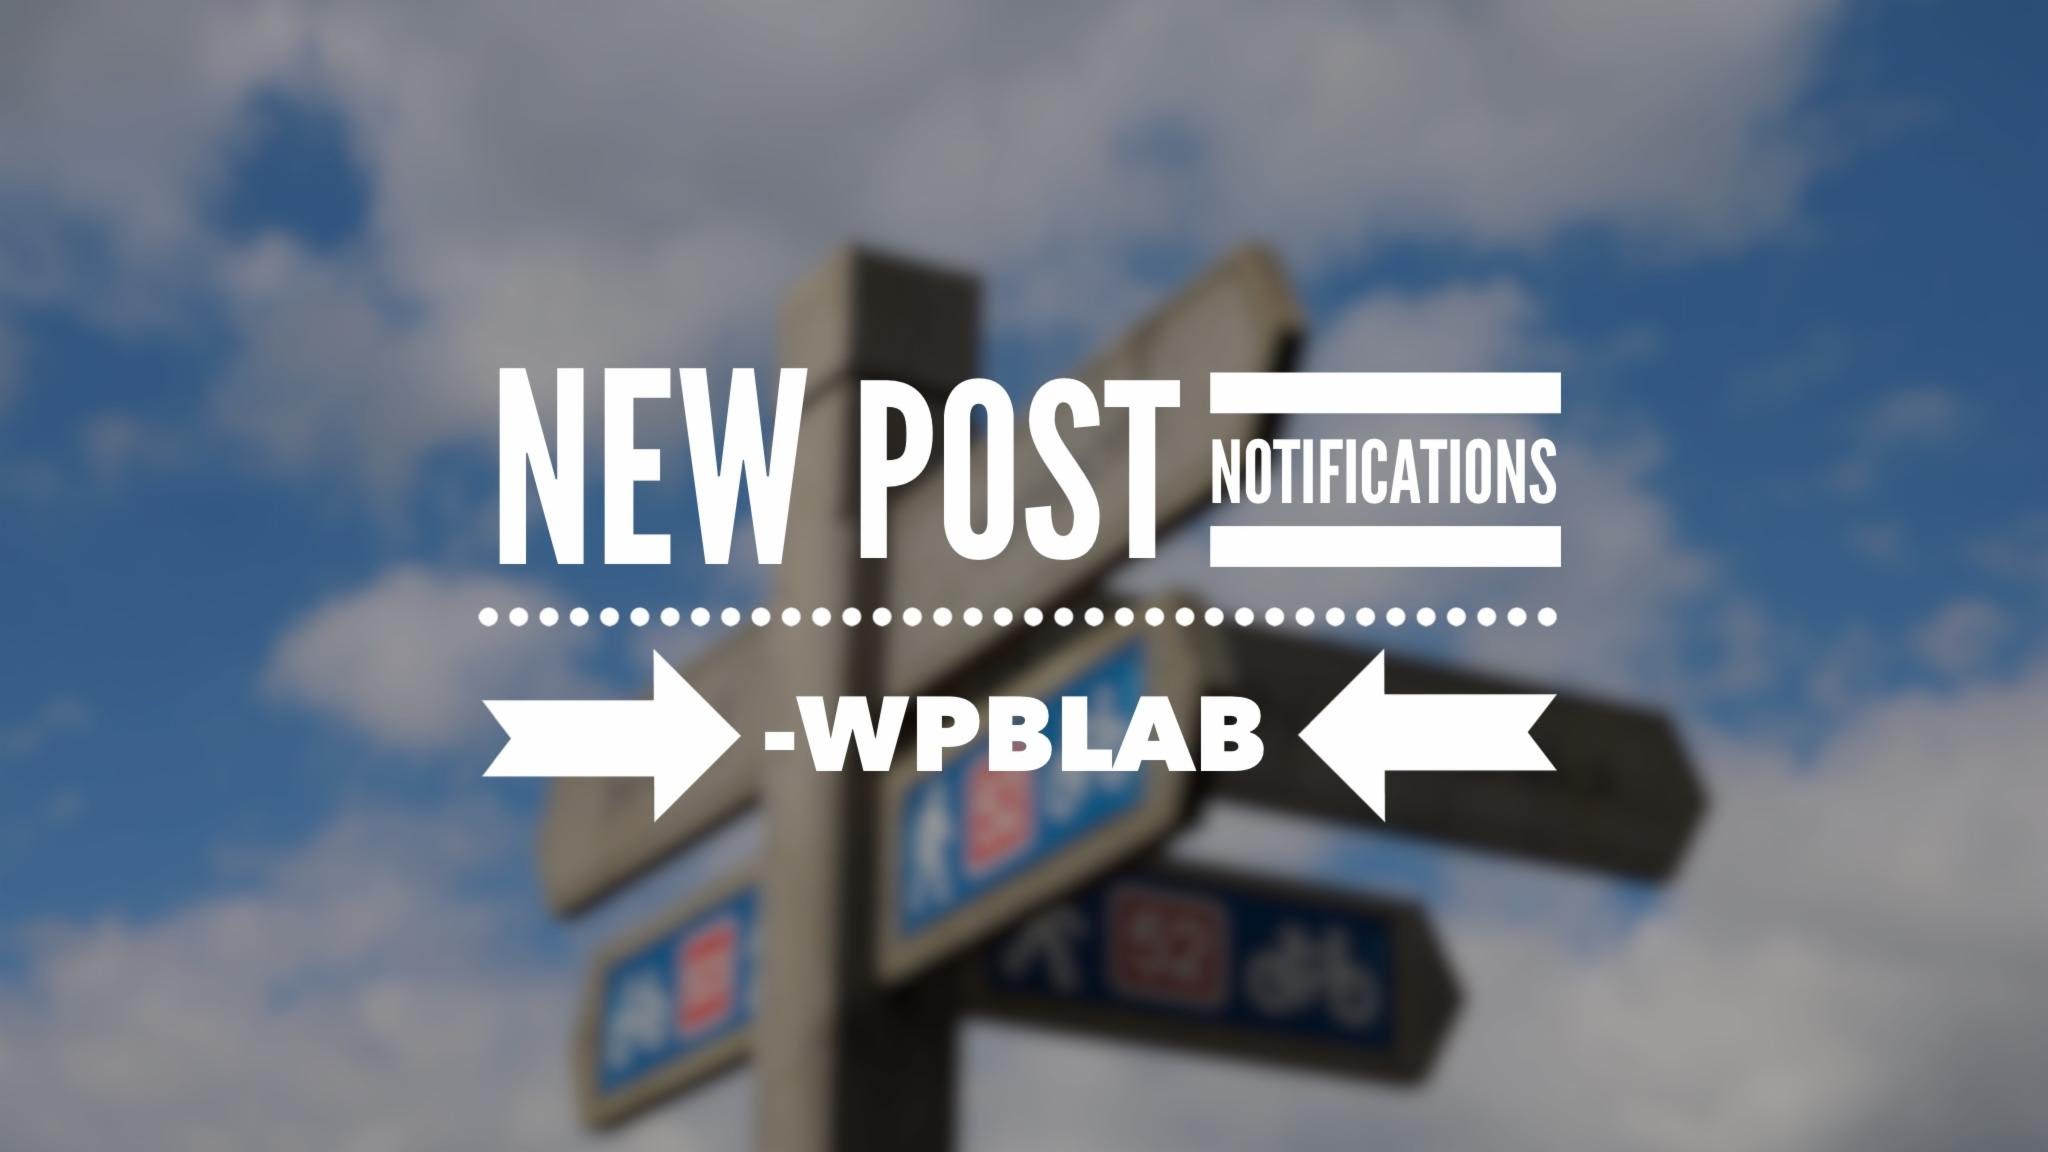 EP019 - "New Post Notifications" #WordPress - #AskWPblab 1